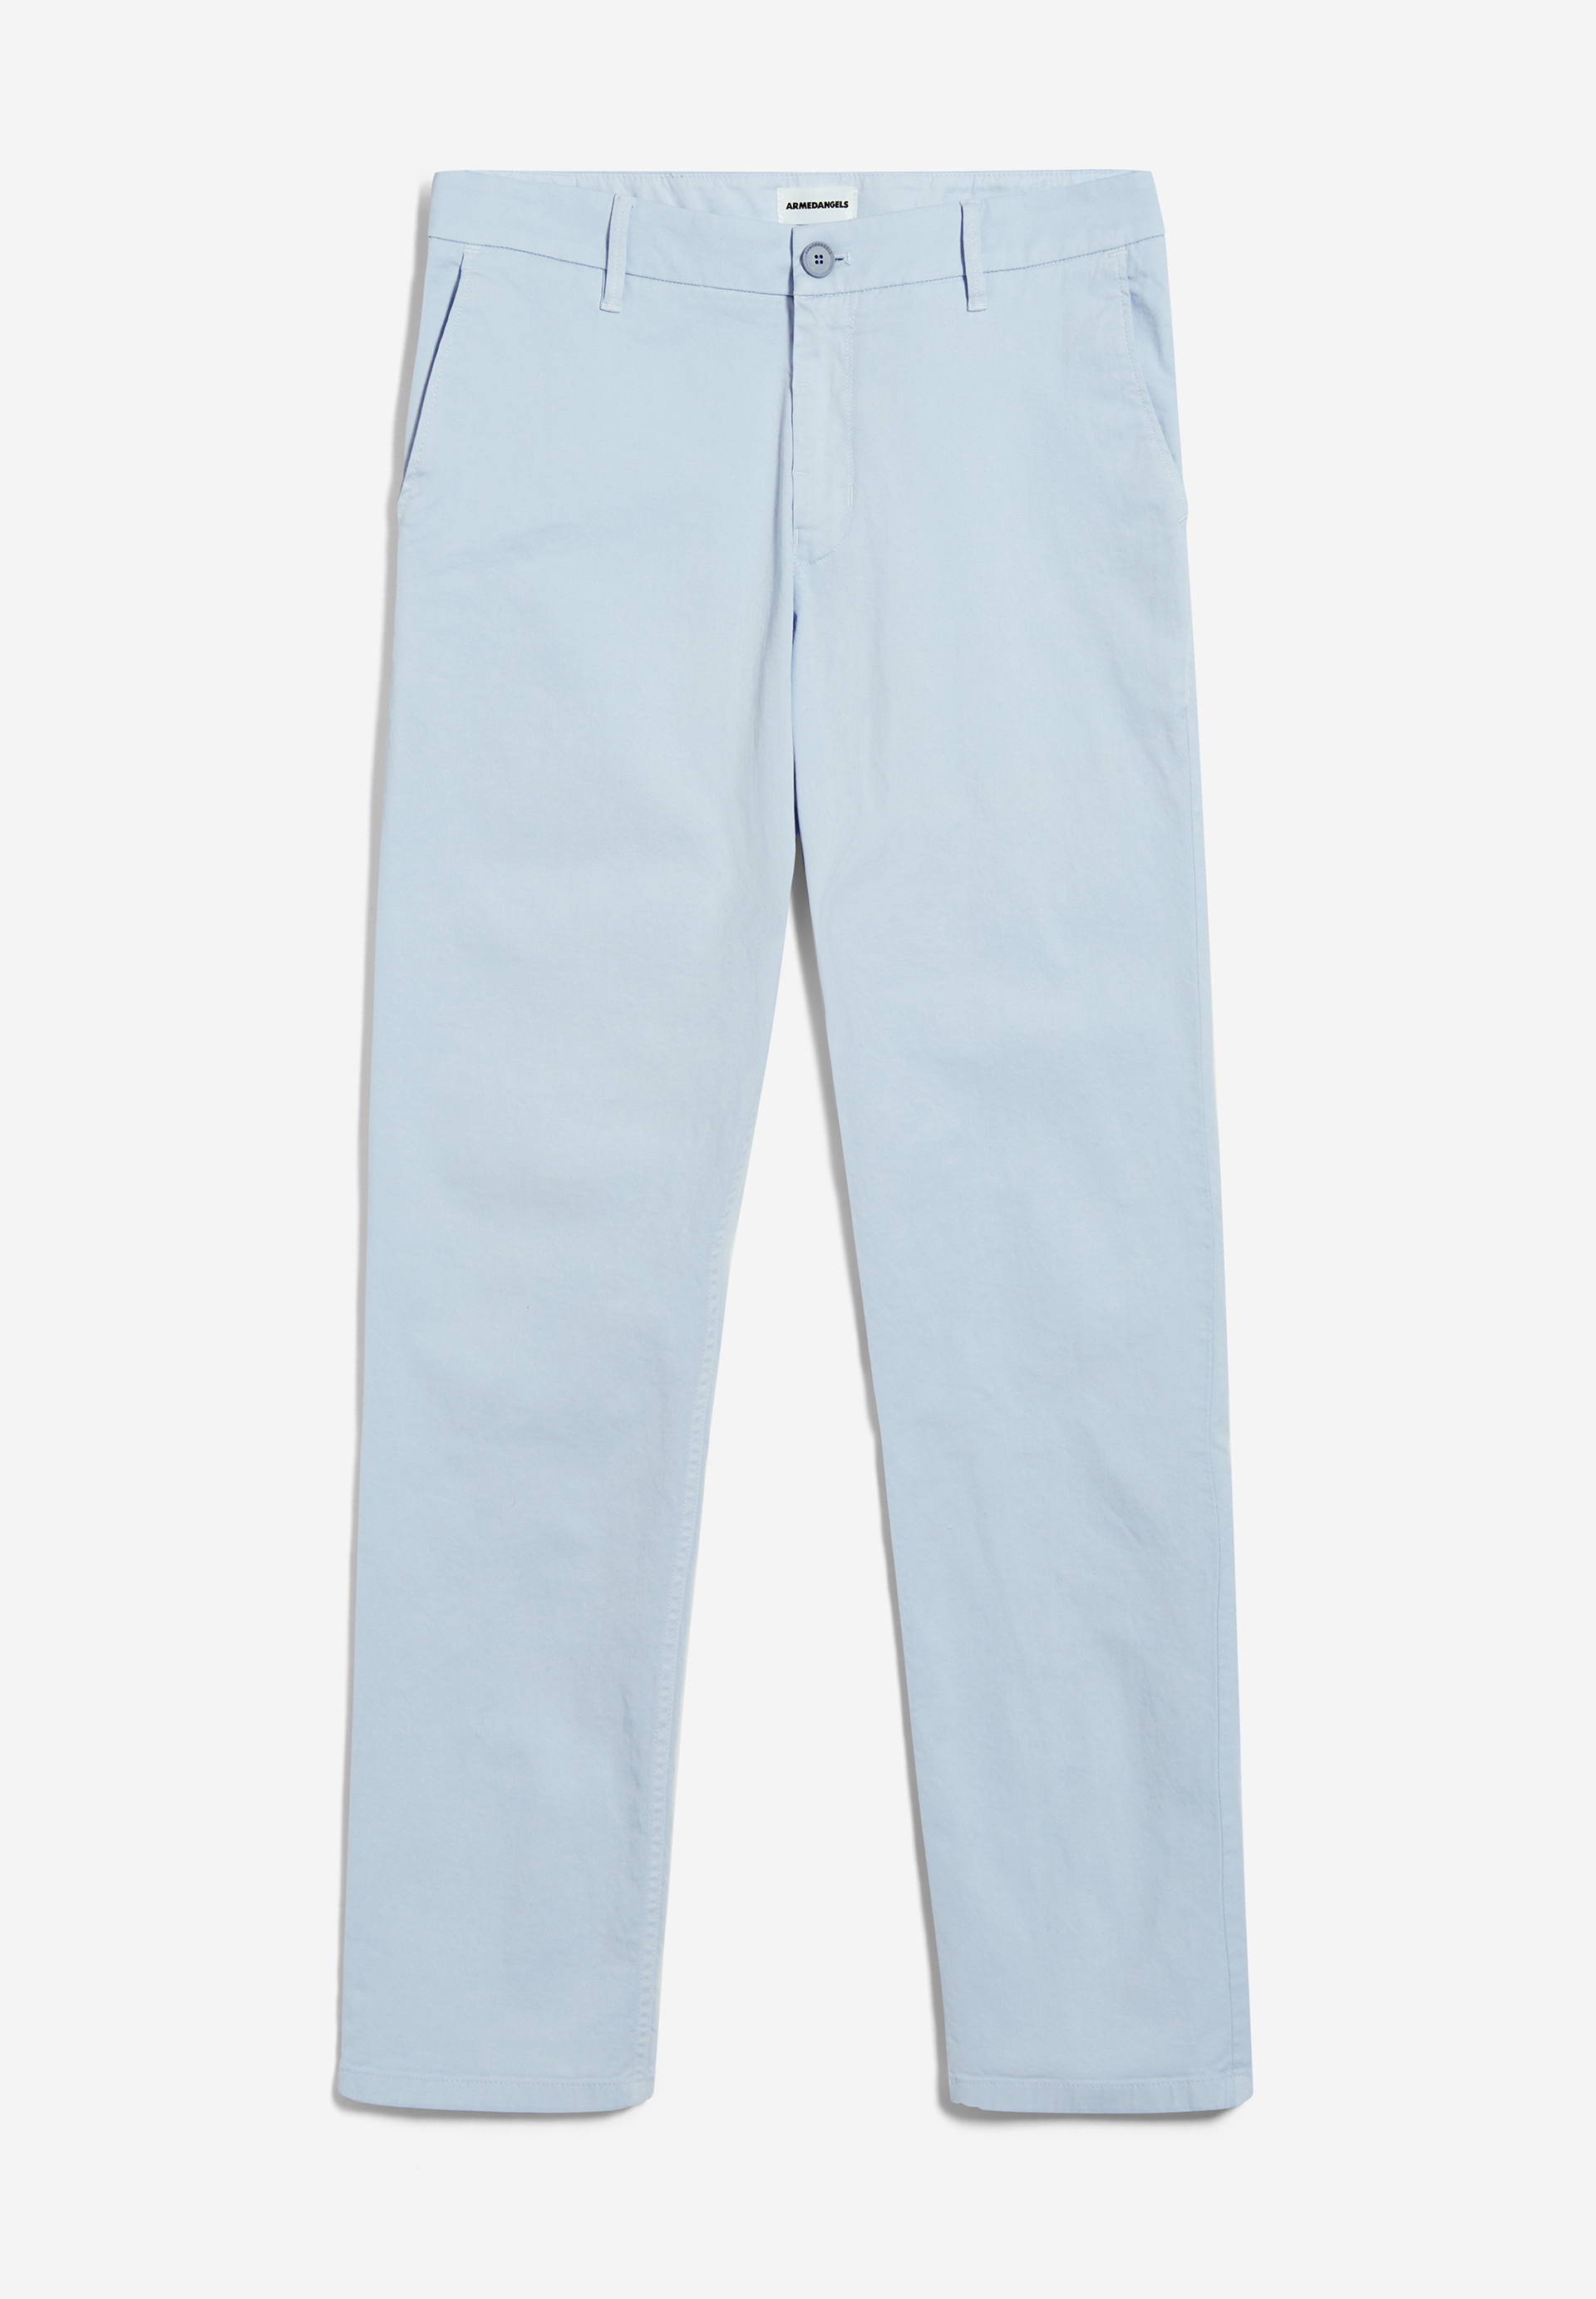 AATHAN Chino Pants Regular Fit made of Organic Cotton Mix